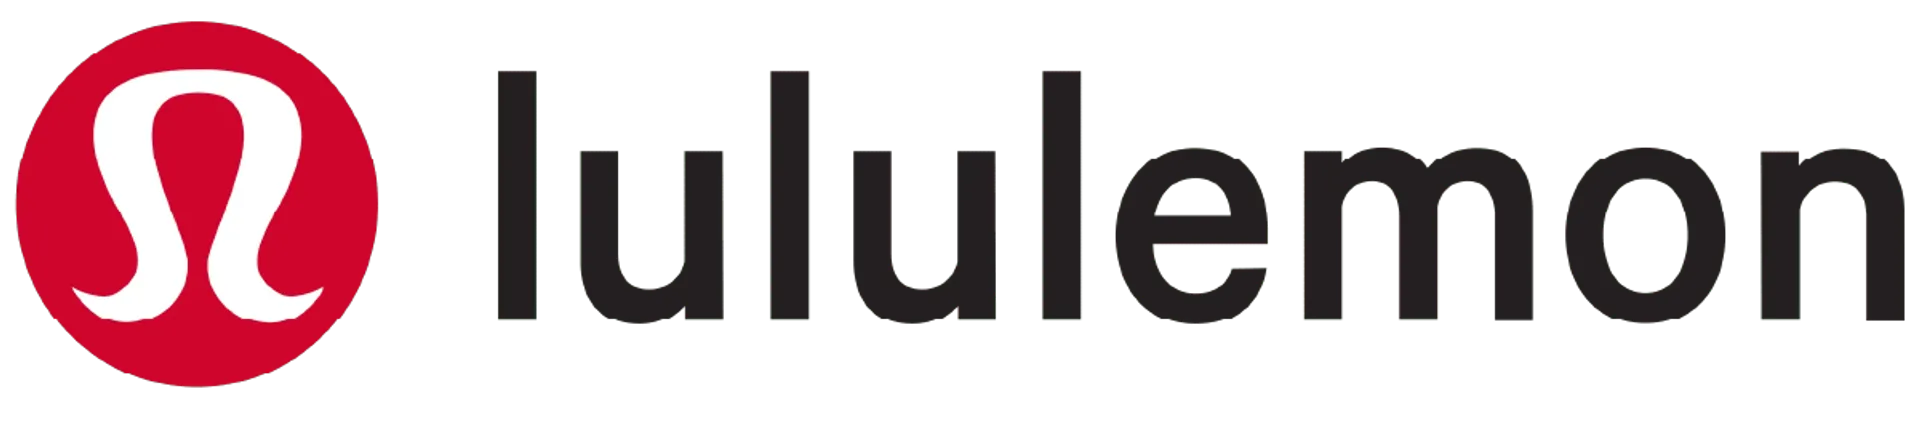 LULULEMON logo de circulaires